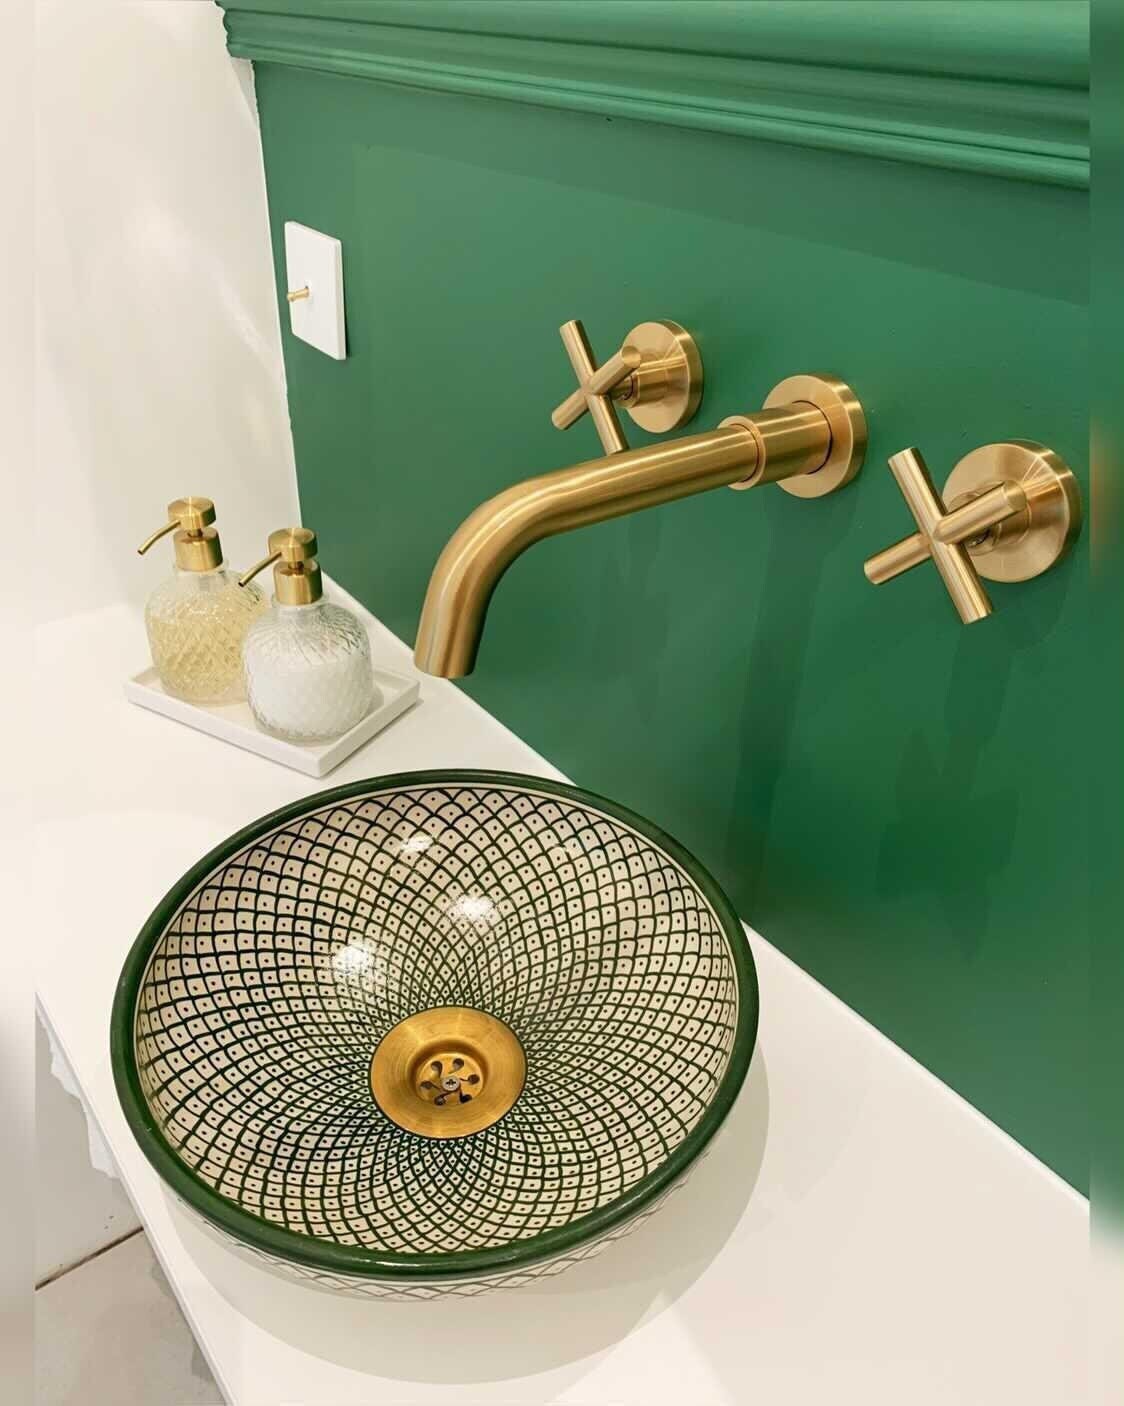 Moroccan sink | moroccan ceramic sink | bathroom sink | moroccan bathroom basin | moroccan sink bowl | Green sink bowl #4